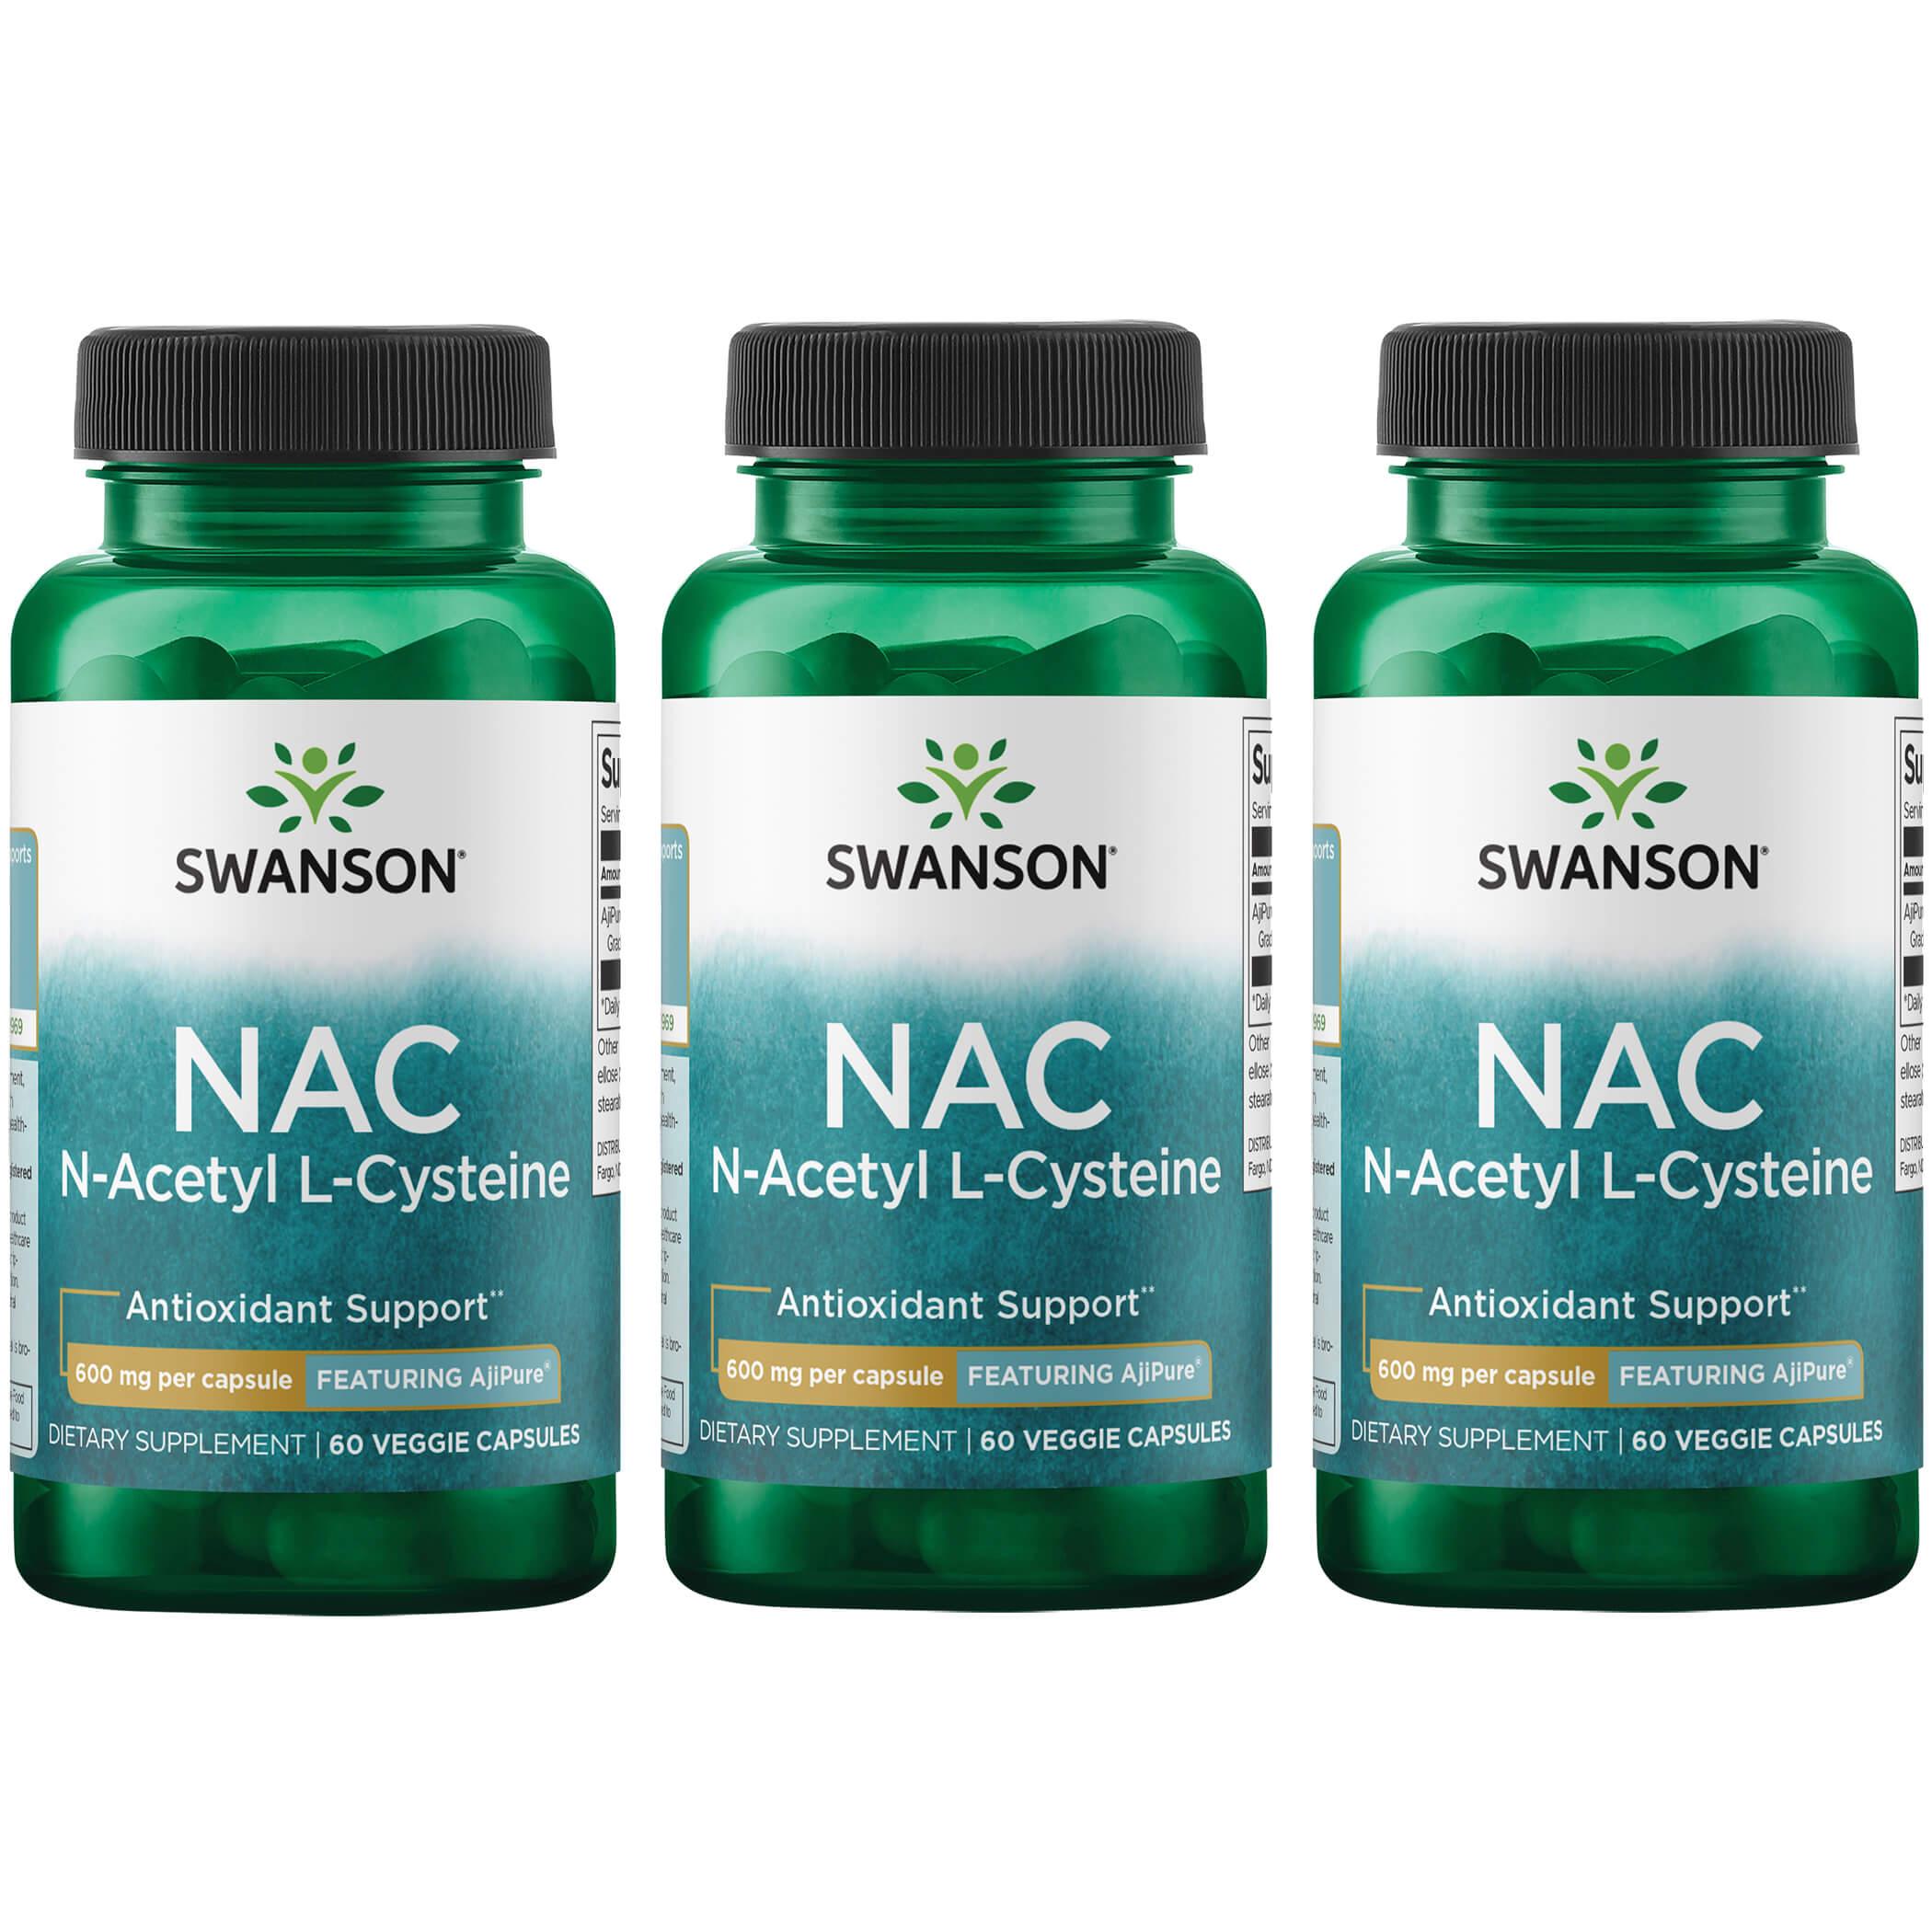 Swanson Ultra Nac N-Acetyl L-Cysteine - Featuring Ajipure 3 Pack Supplement Vitamin 600 mg 60 Veg Caps